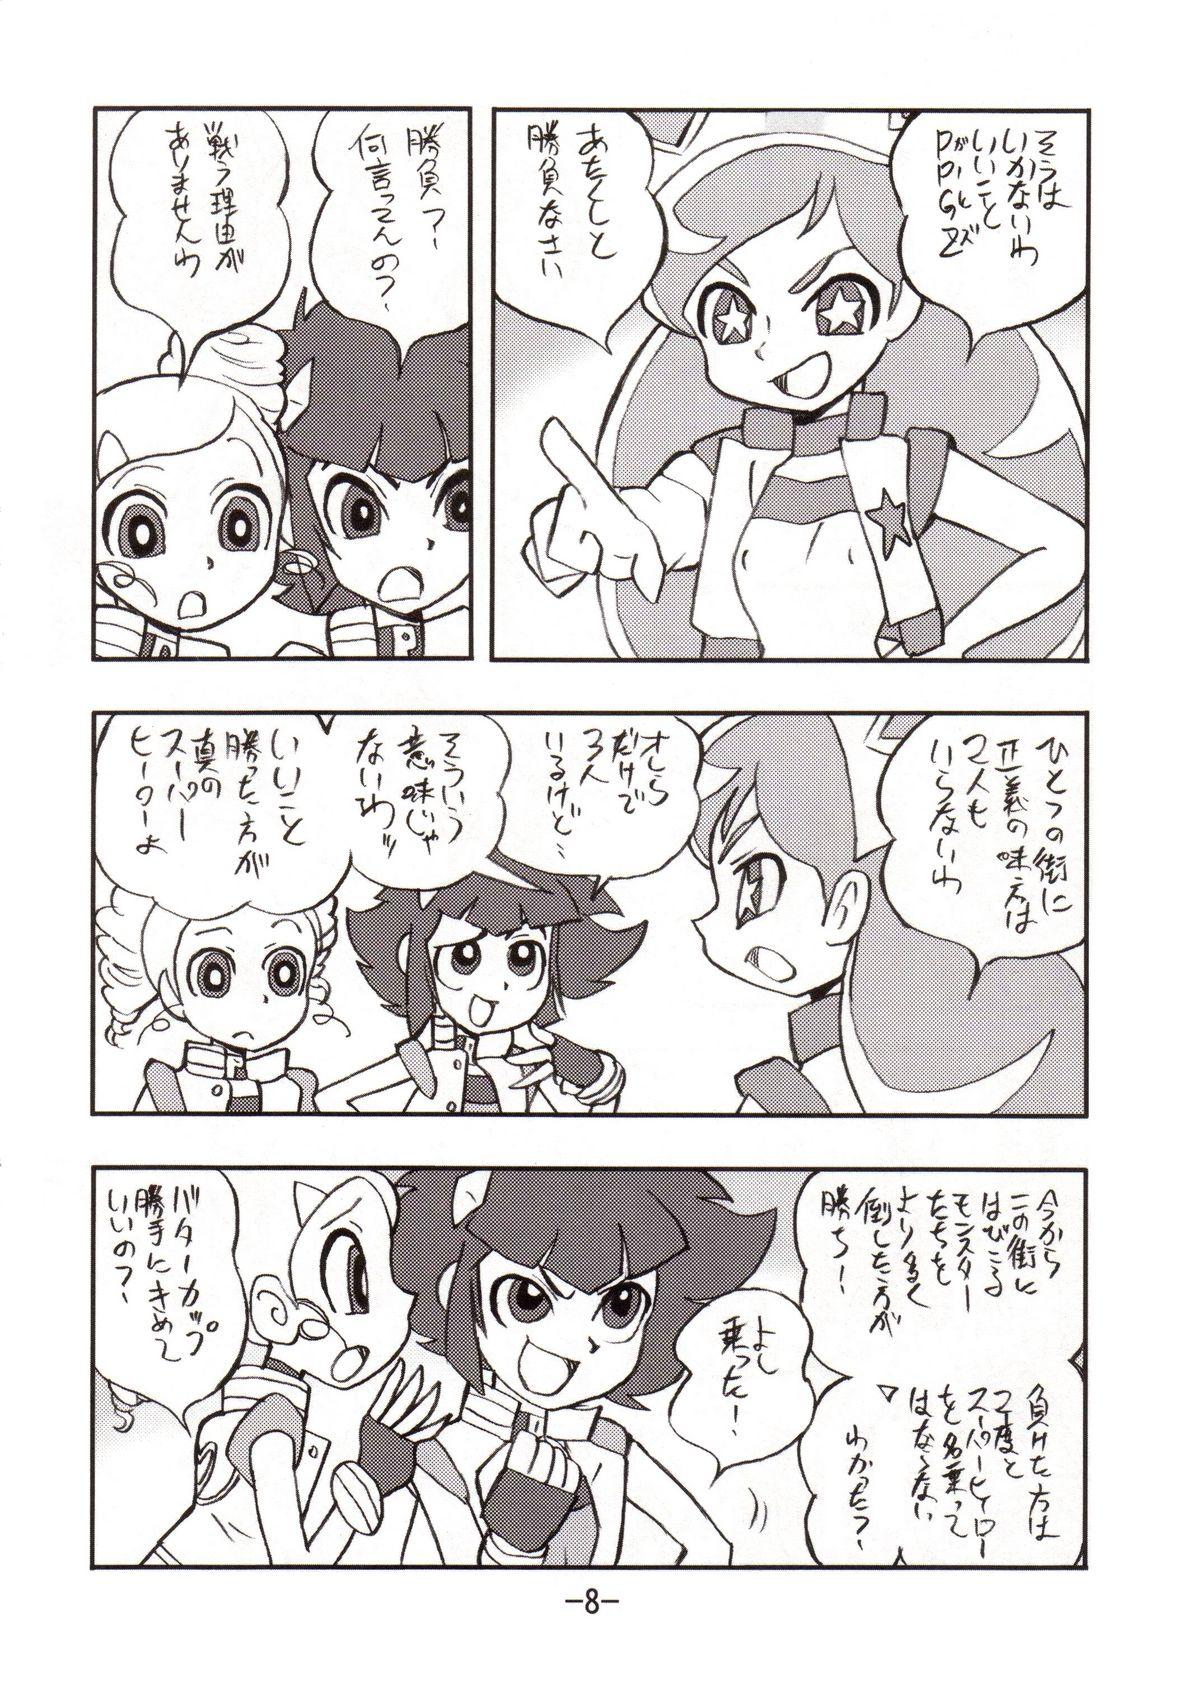 Tributo princess wishes vol. 2 - Powerpuff girls z Adolescente - Page 7